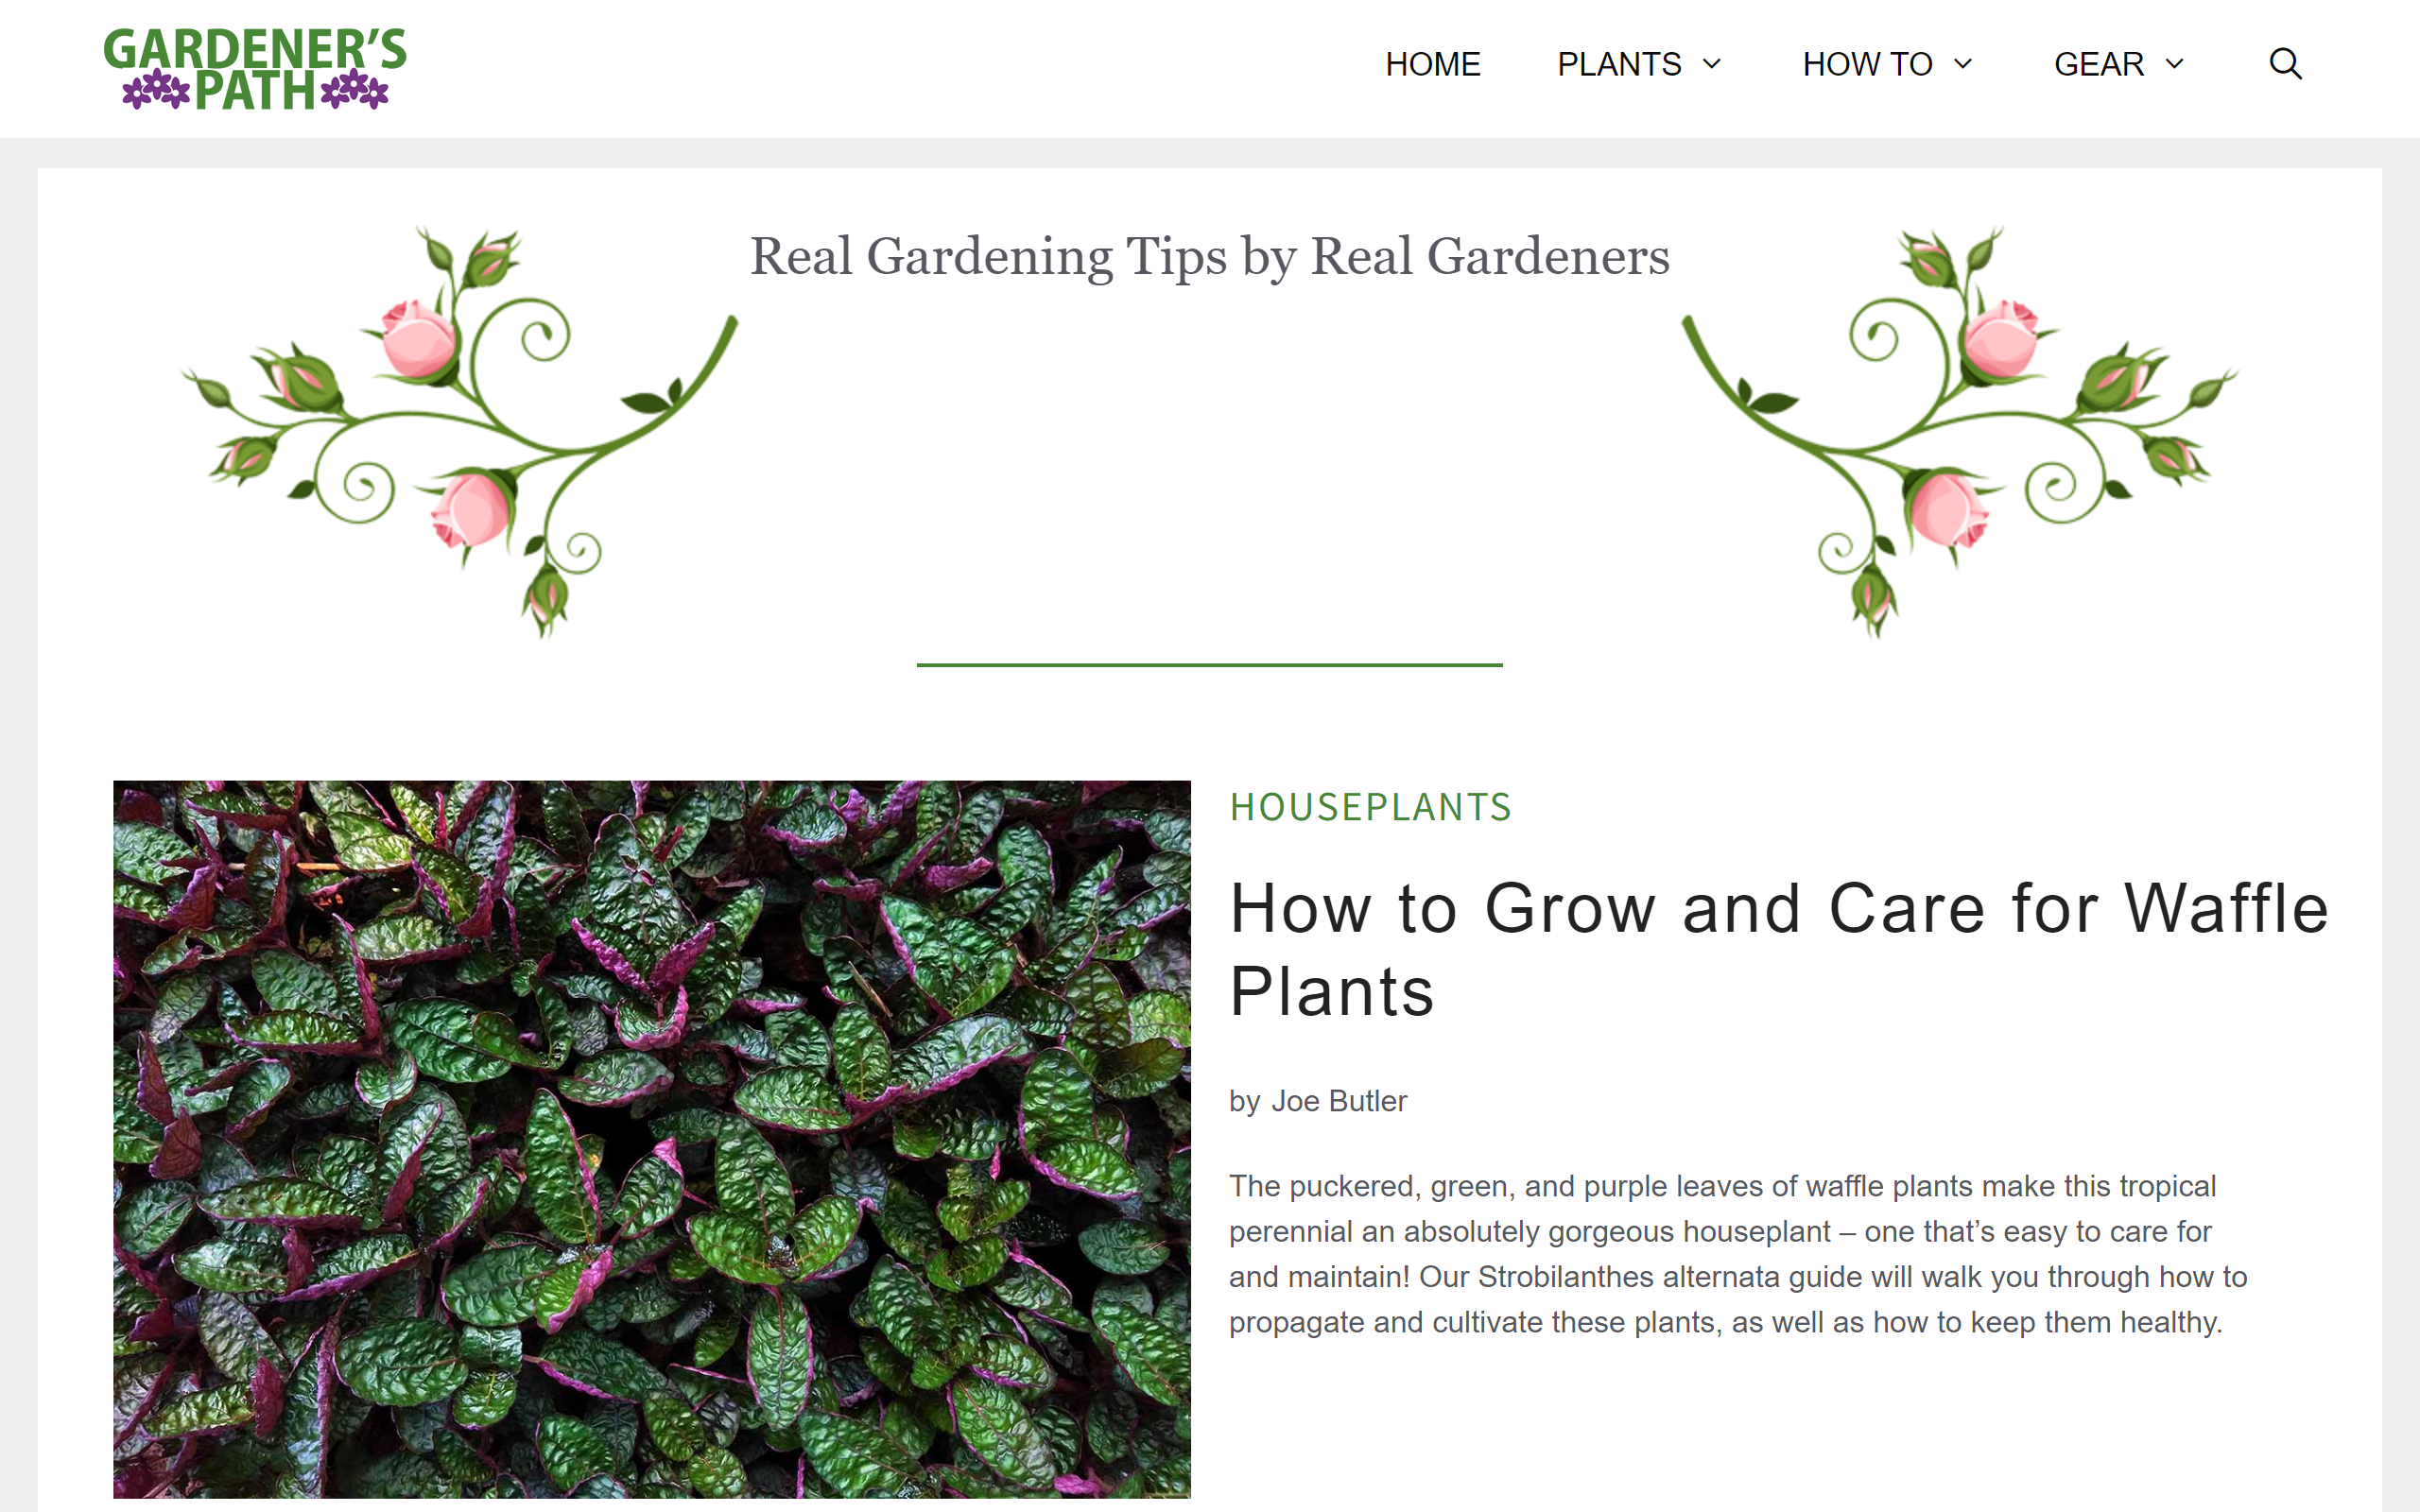 Gardener’s Path gardening blog